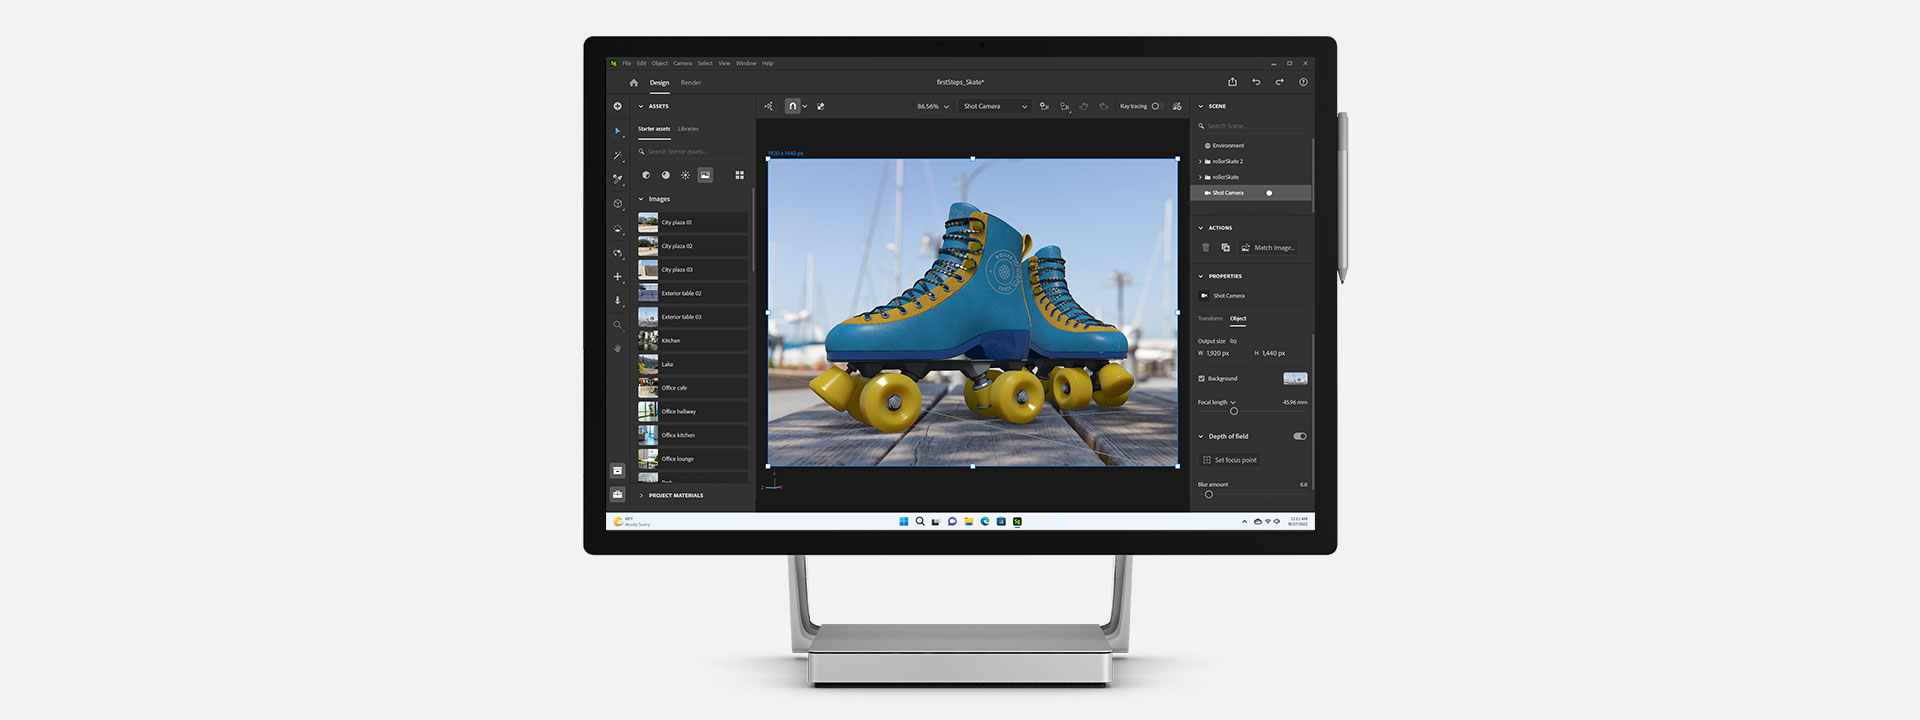 Surface Studio 2+ 商用版屏幕中显示 Adobe Substance 3D。